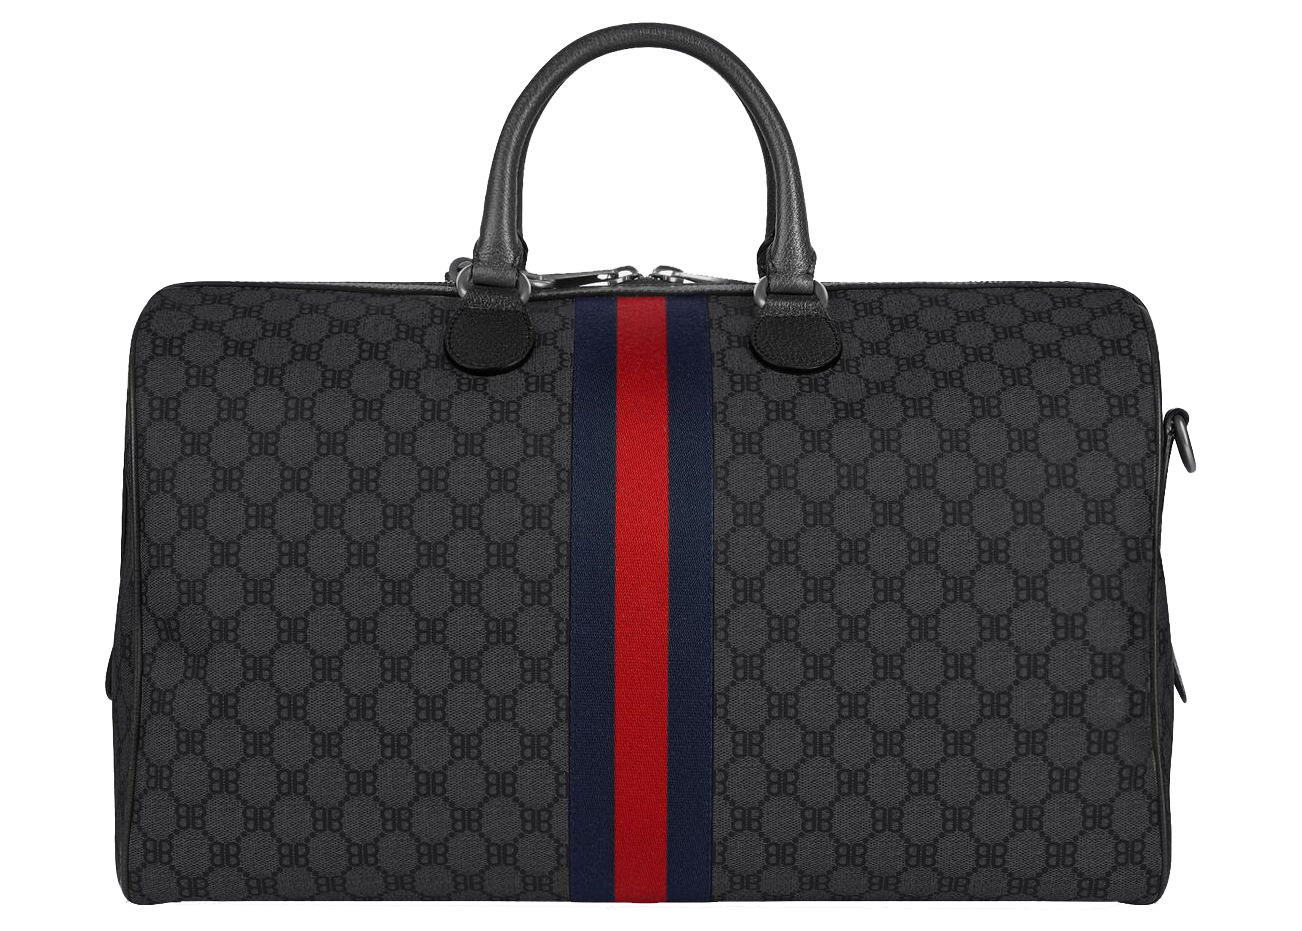 Gucci x Balenciaga The Hacker Project Medium Duffle Bag Black in 